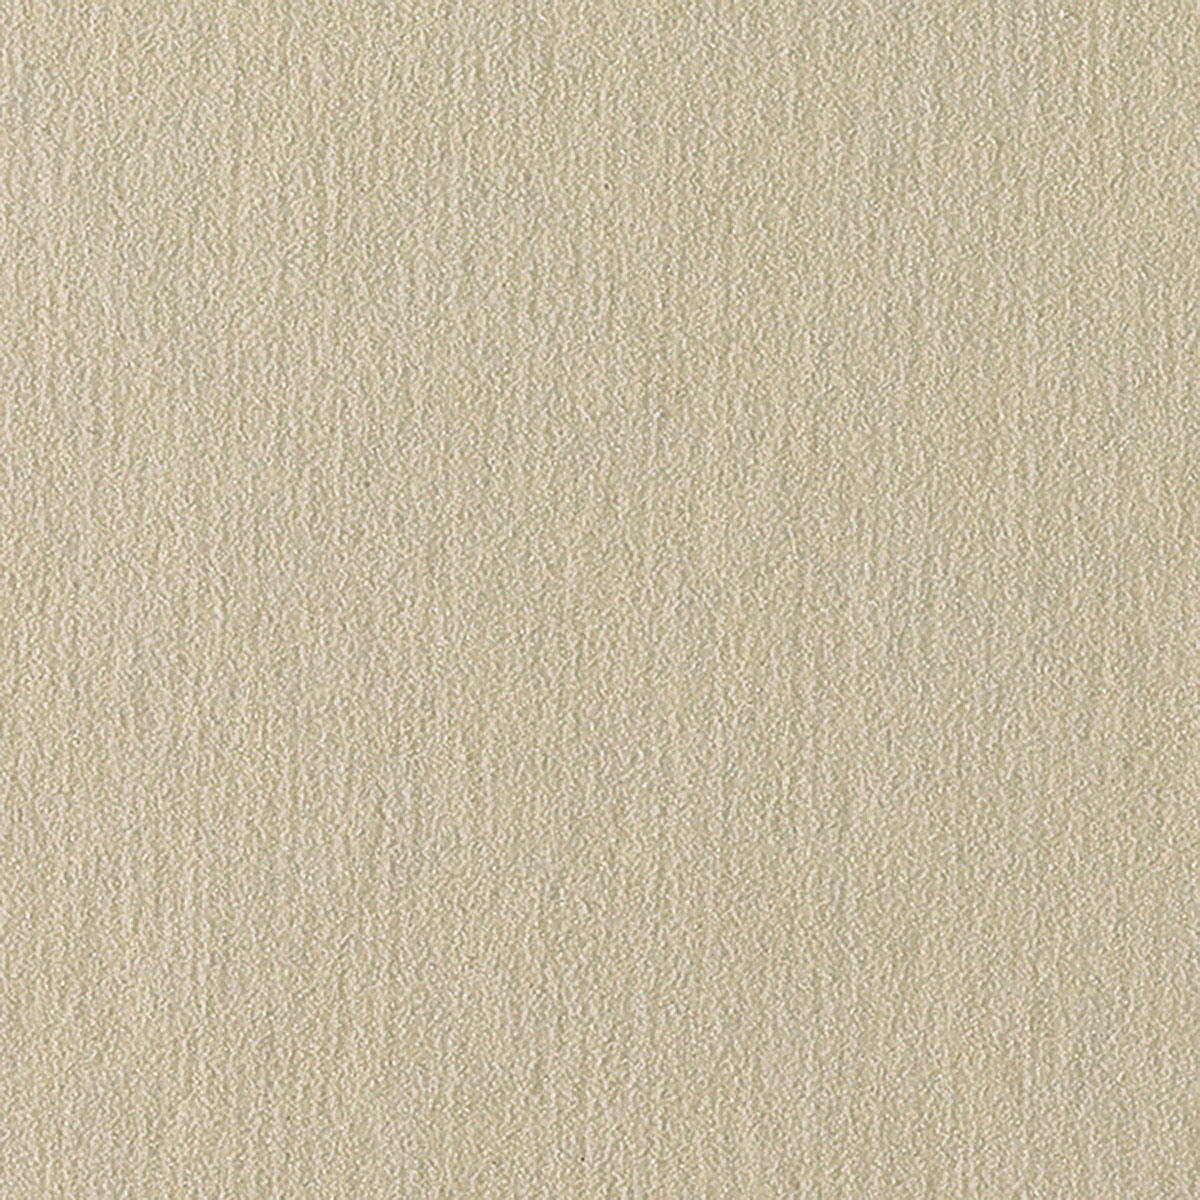 UART Sanded Pastel Paper Pad - 600 Grit, 9 inch x 12 inch, 10 Sheets, Dark